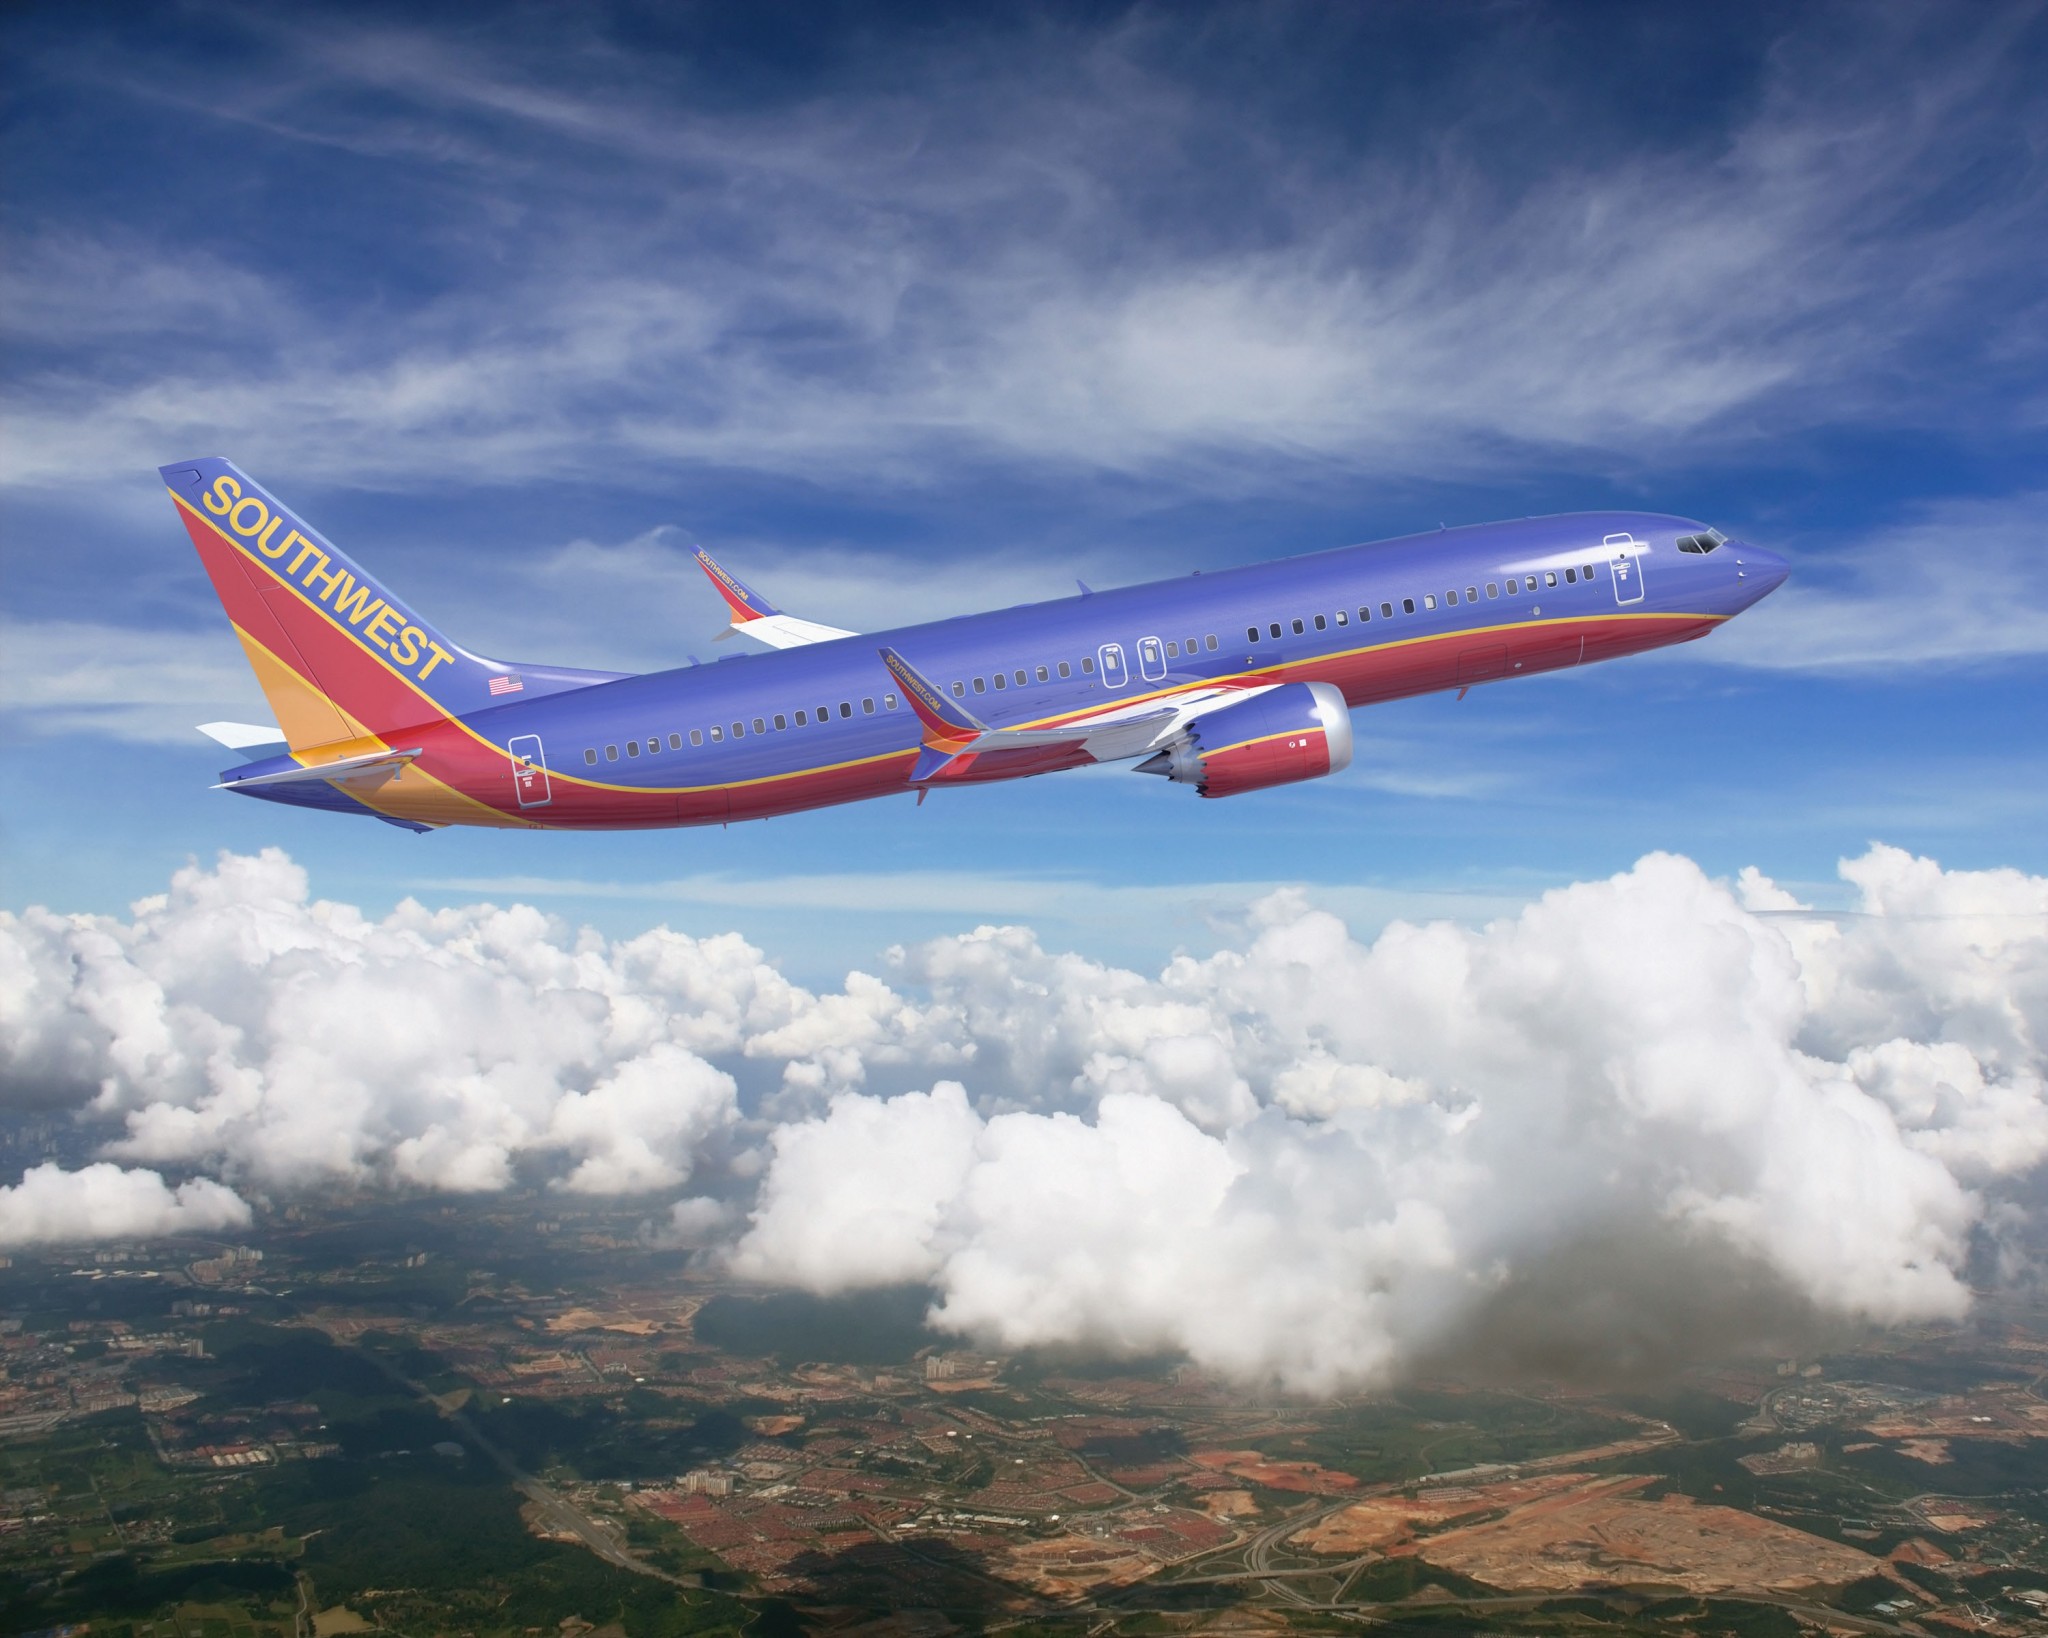 Southwest Airlines returns value to shareholders